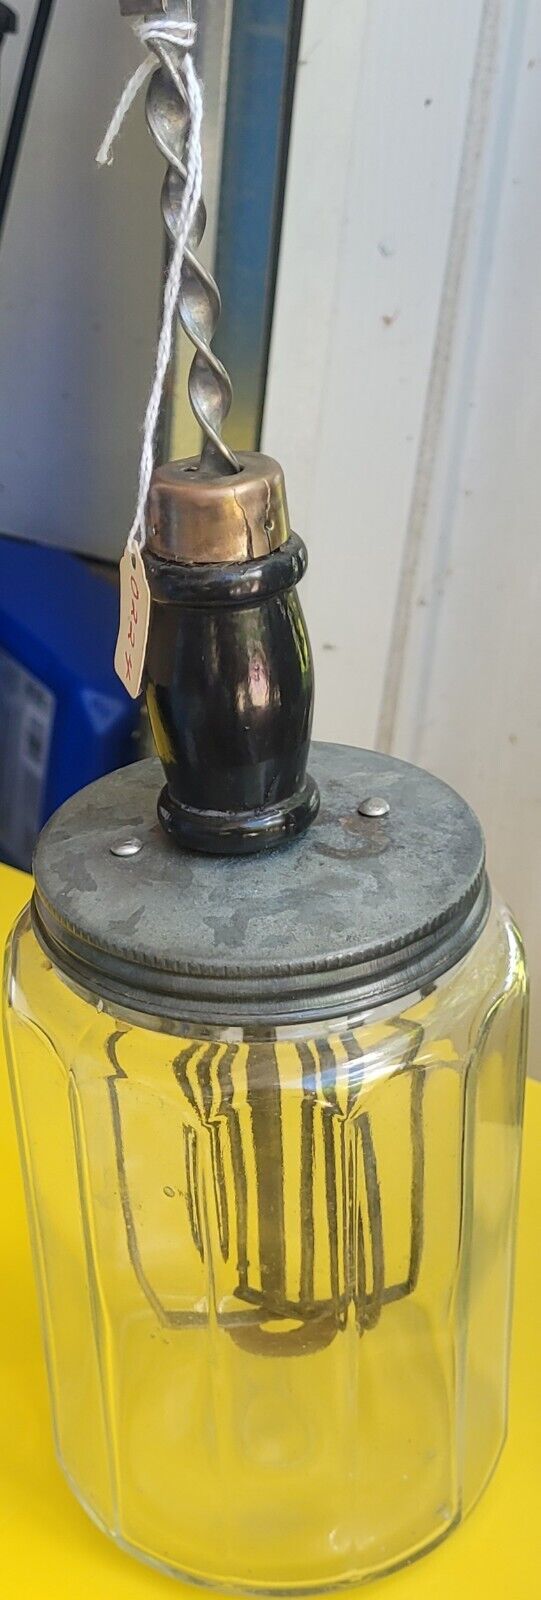 Antique Glass Jar Egg Beater Hand Mixer Quart Jar No Chips, Breaks, Flea Bites